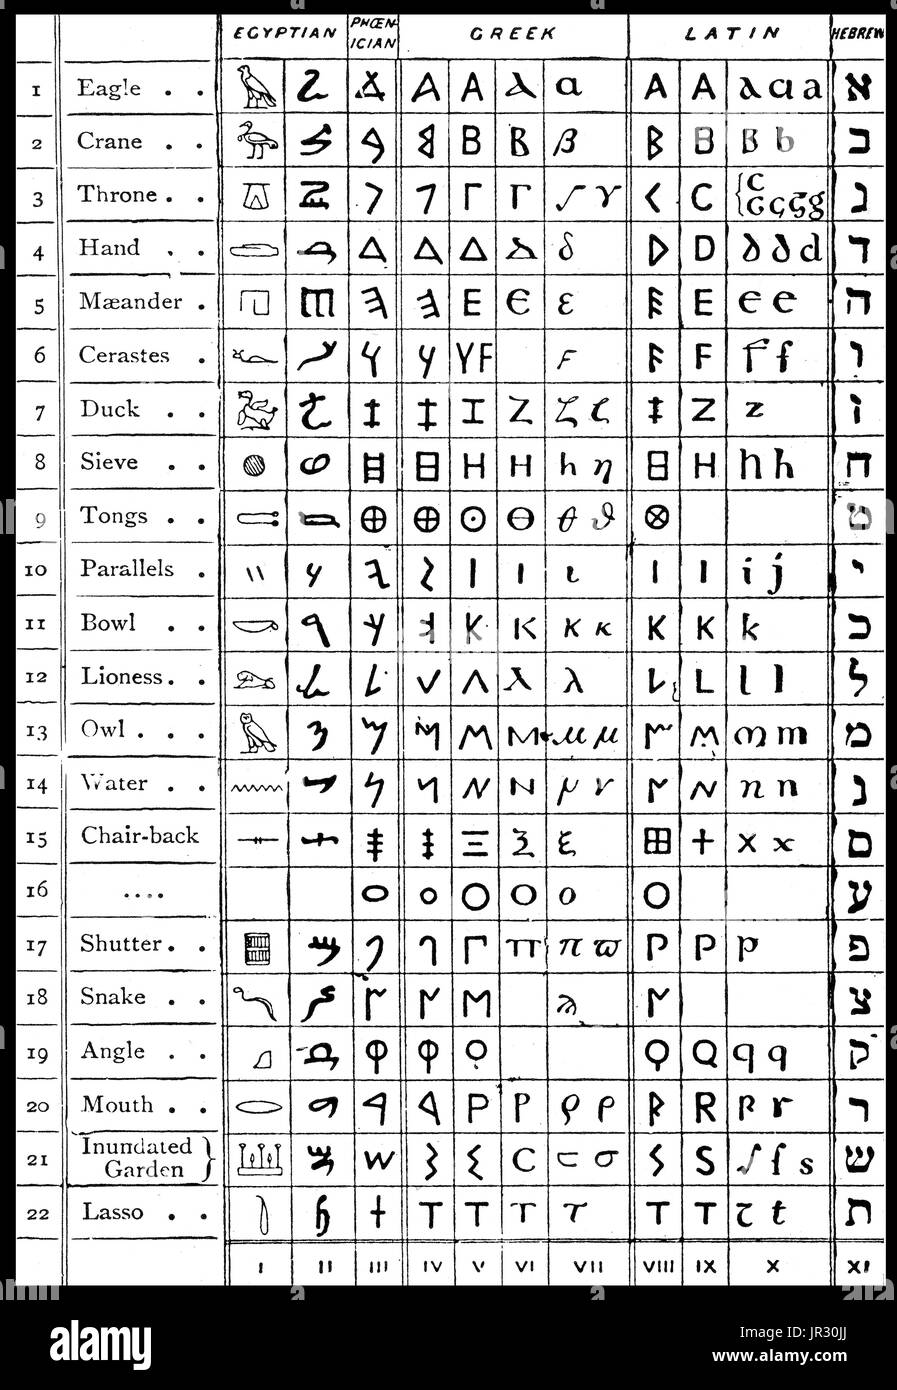 Pictogramas antiguos,Heiroglyphs y alfabetos Foto de stock